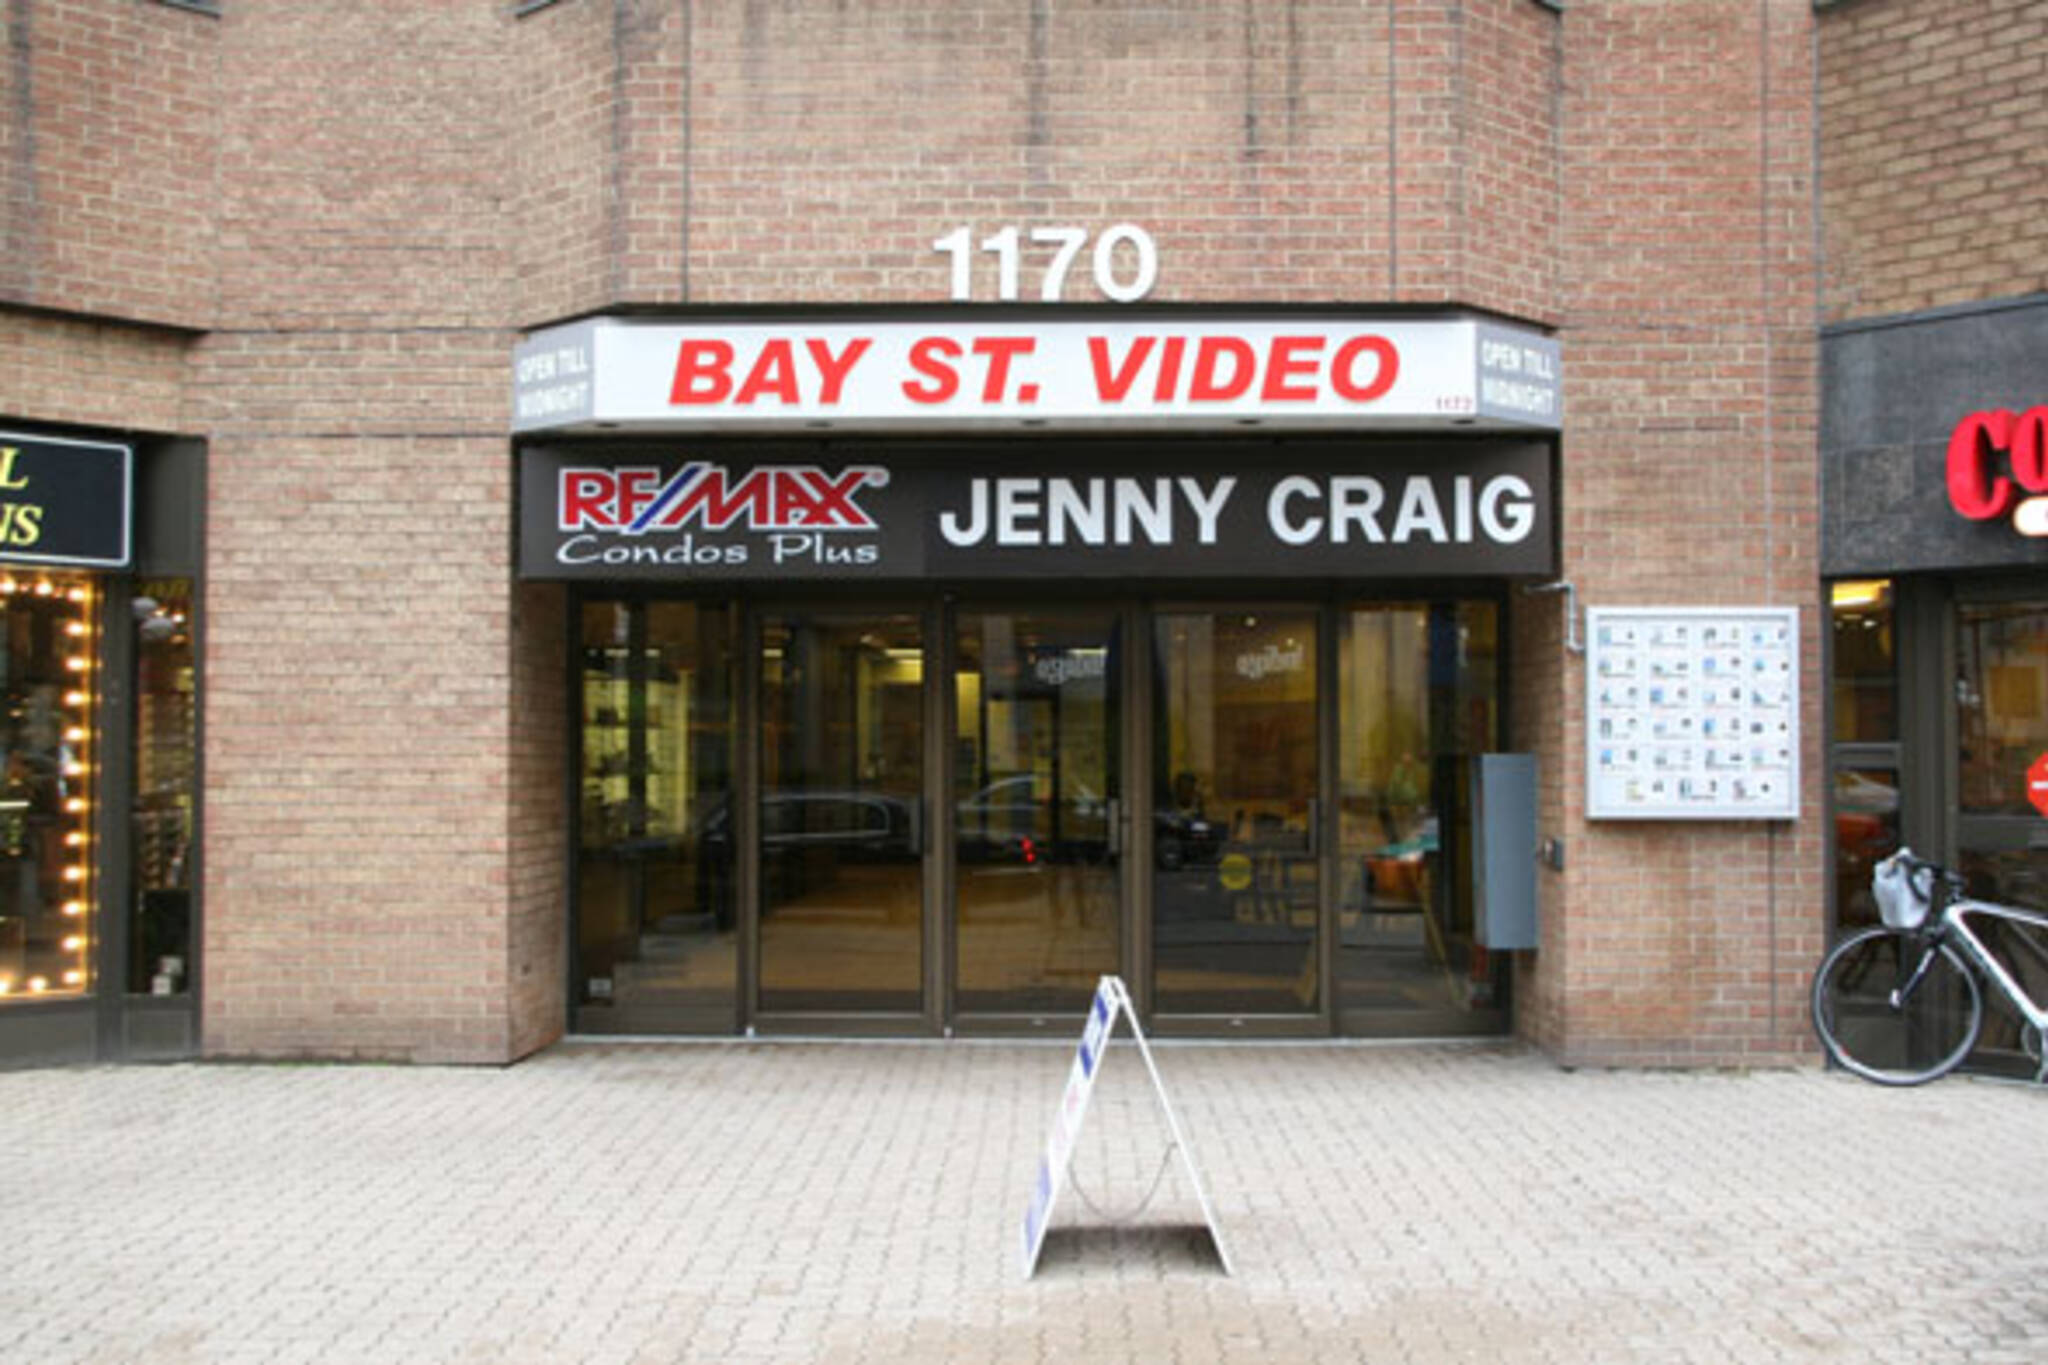 Bay street video